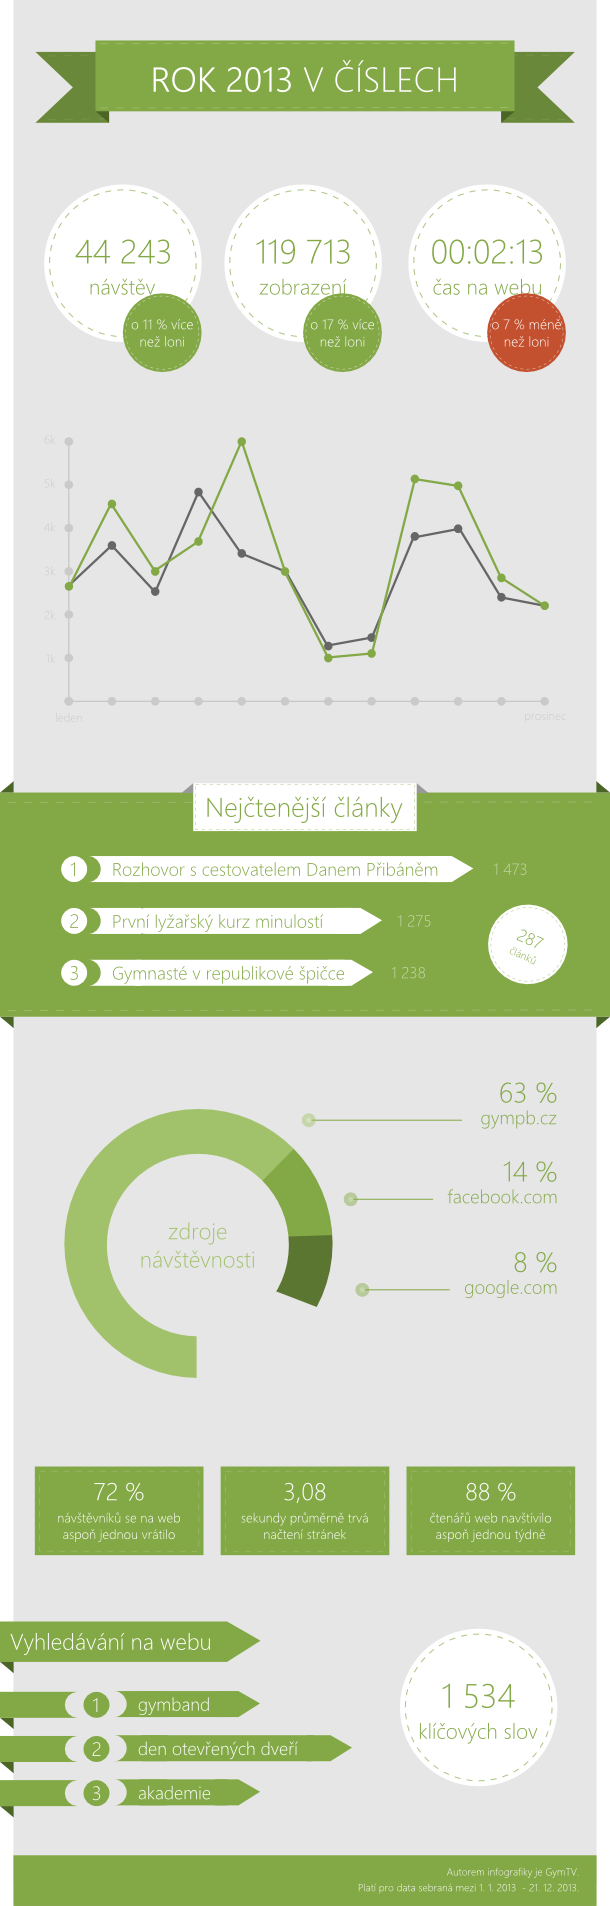 infografika2013